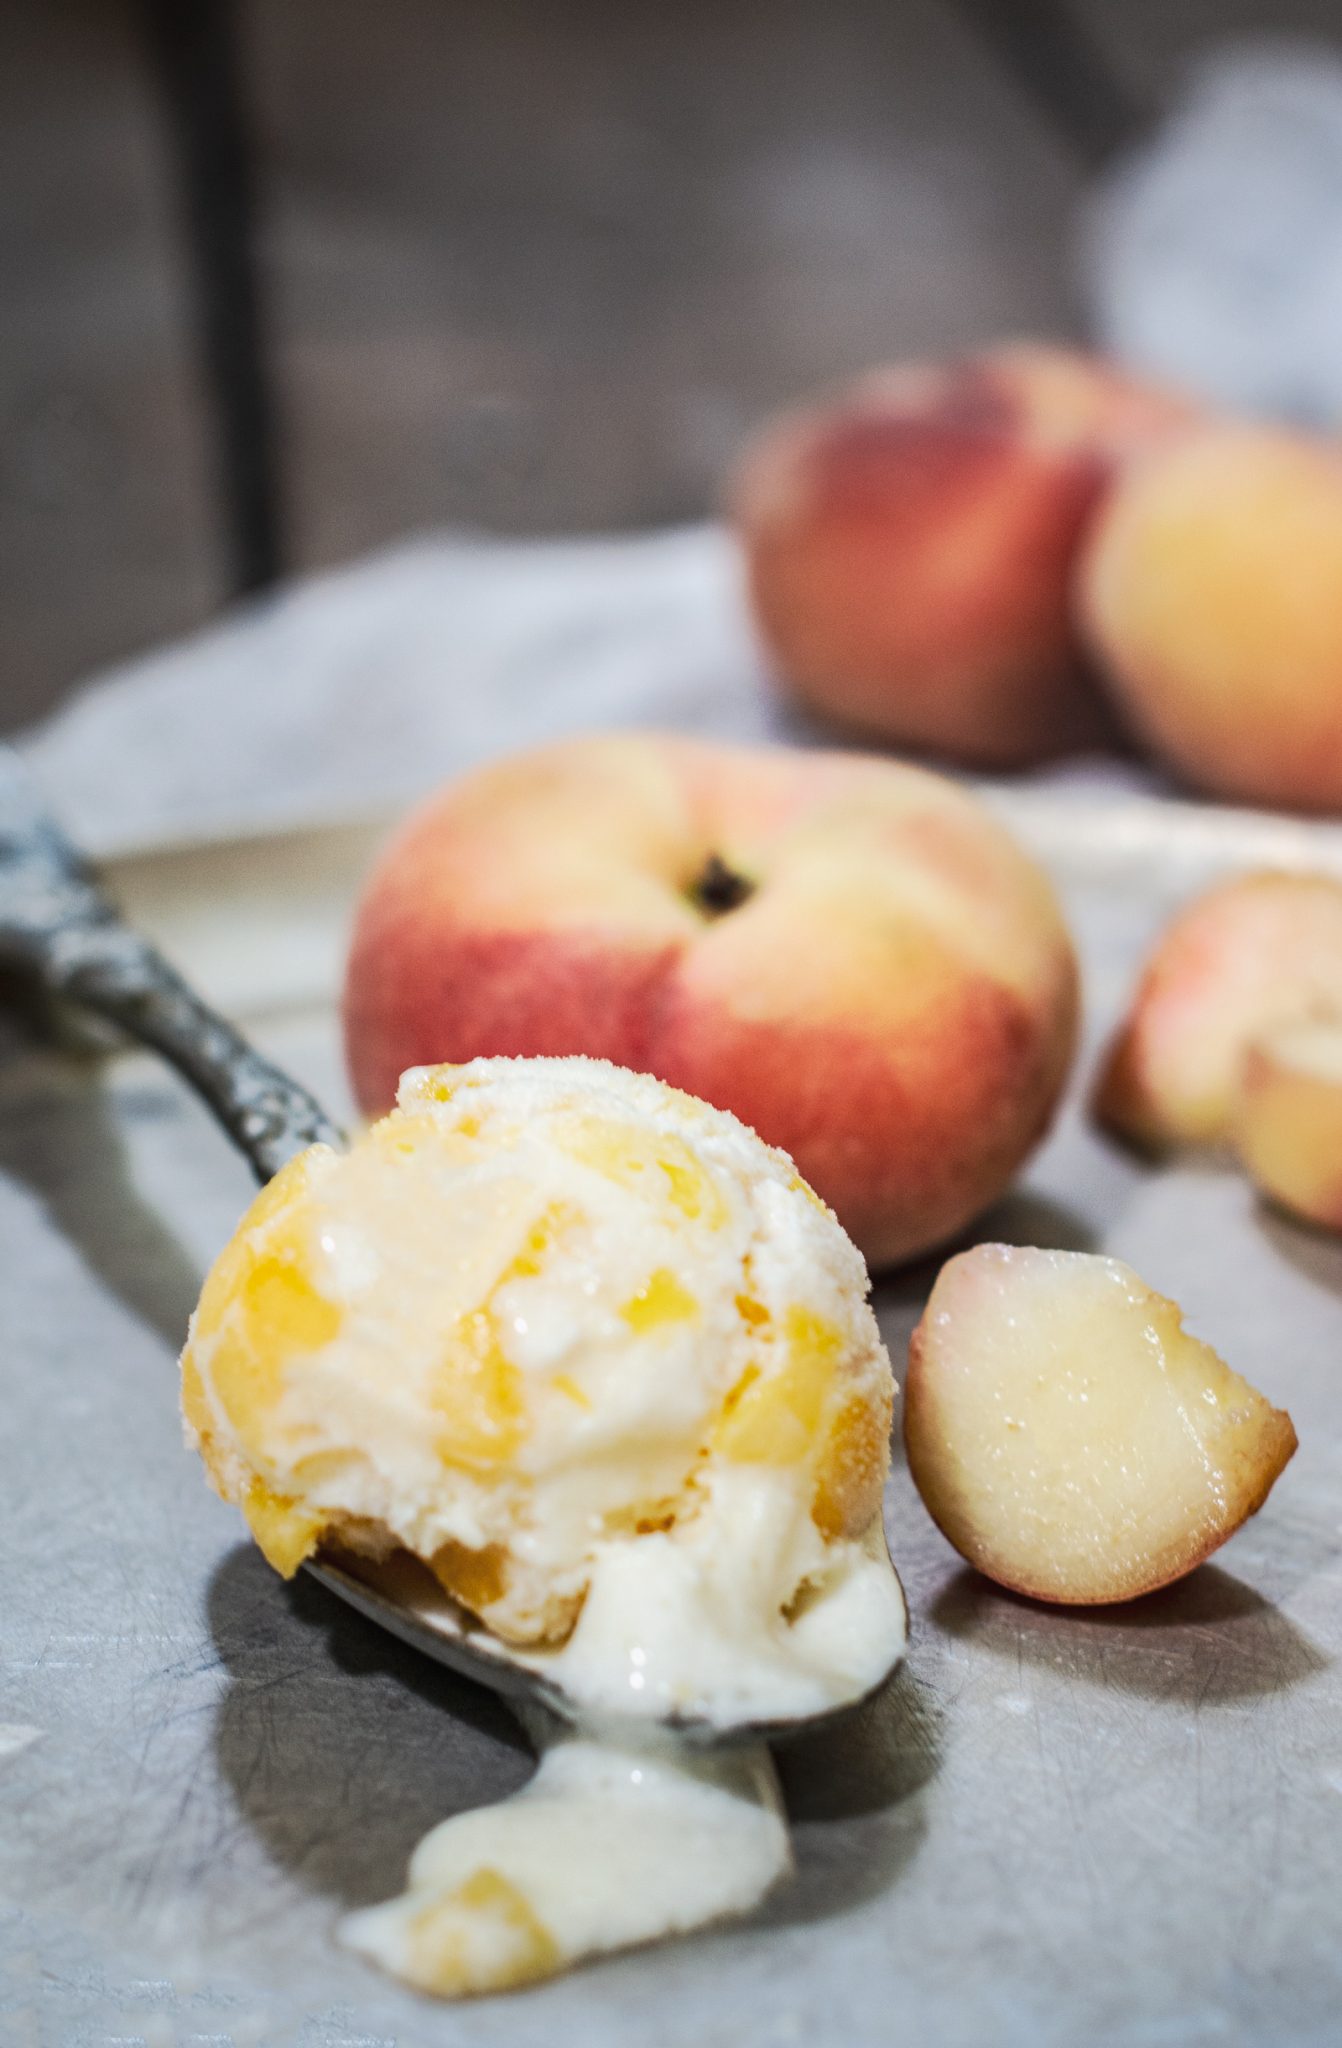 Homemade Peach Ice Cream, easy to make and taste amazing!